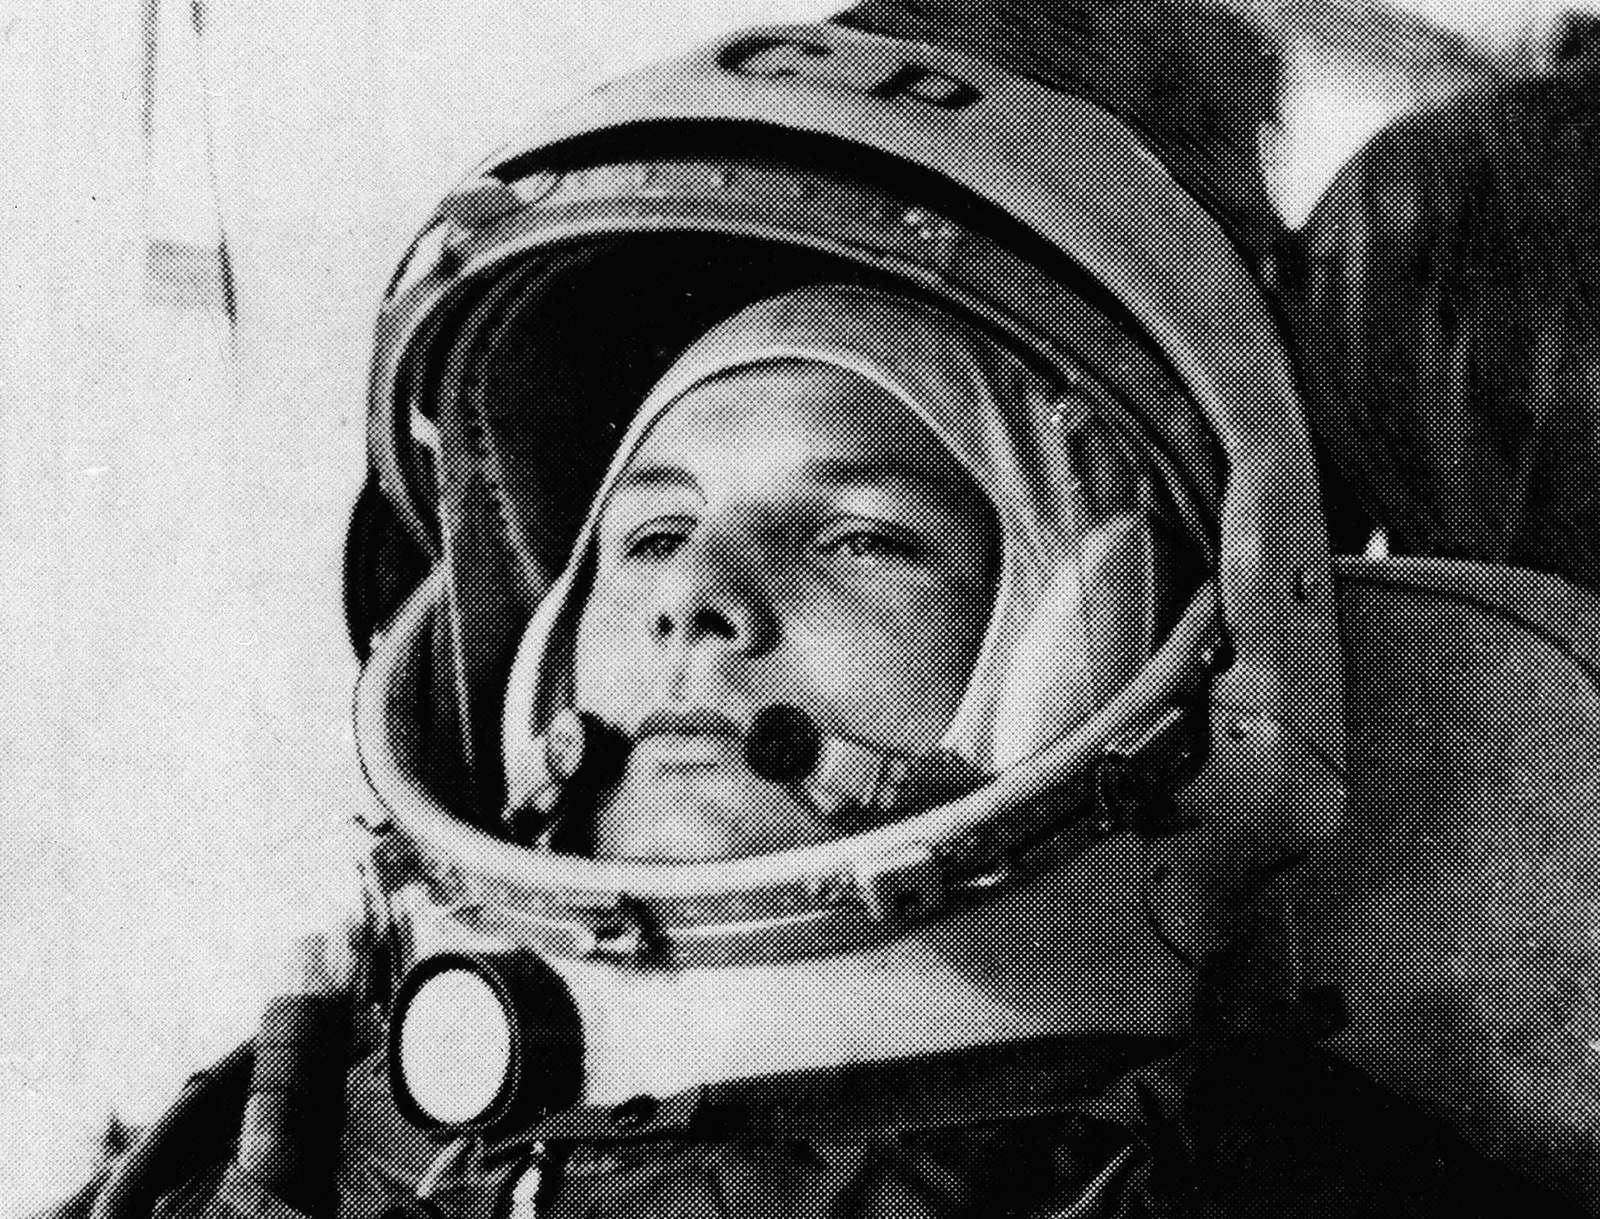 Soviet cosmonaut made pioneering spaceflight 60 years ago